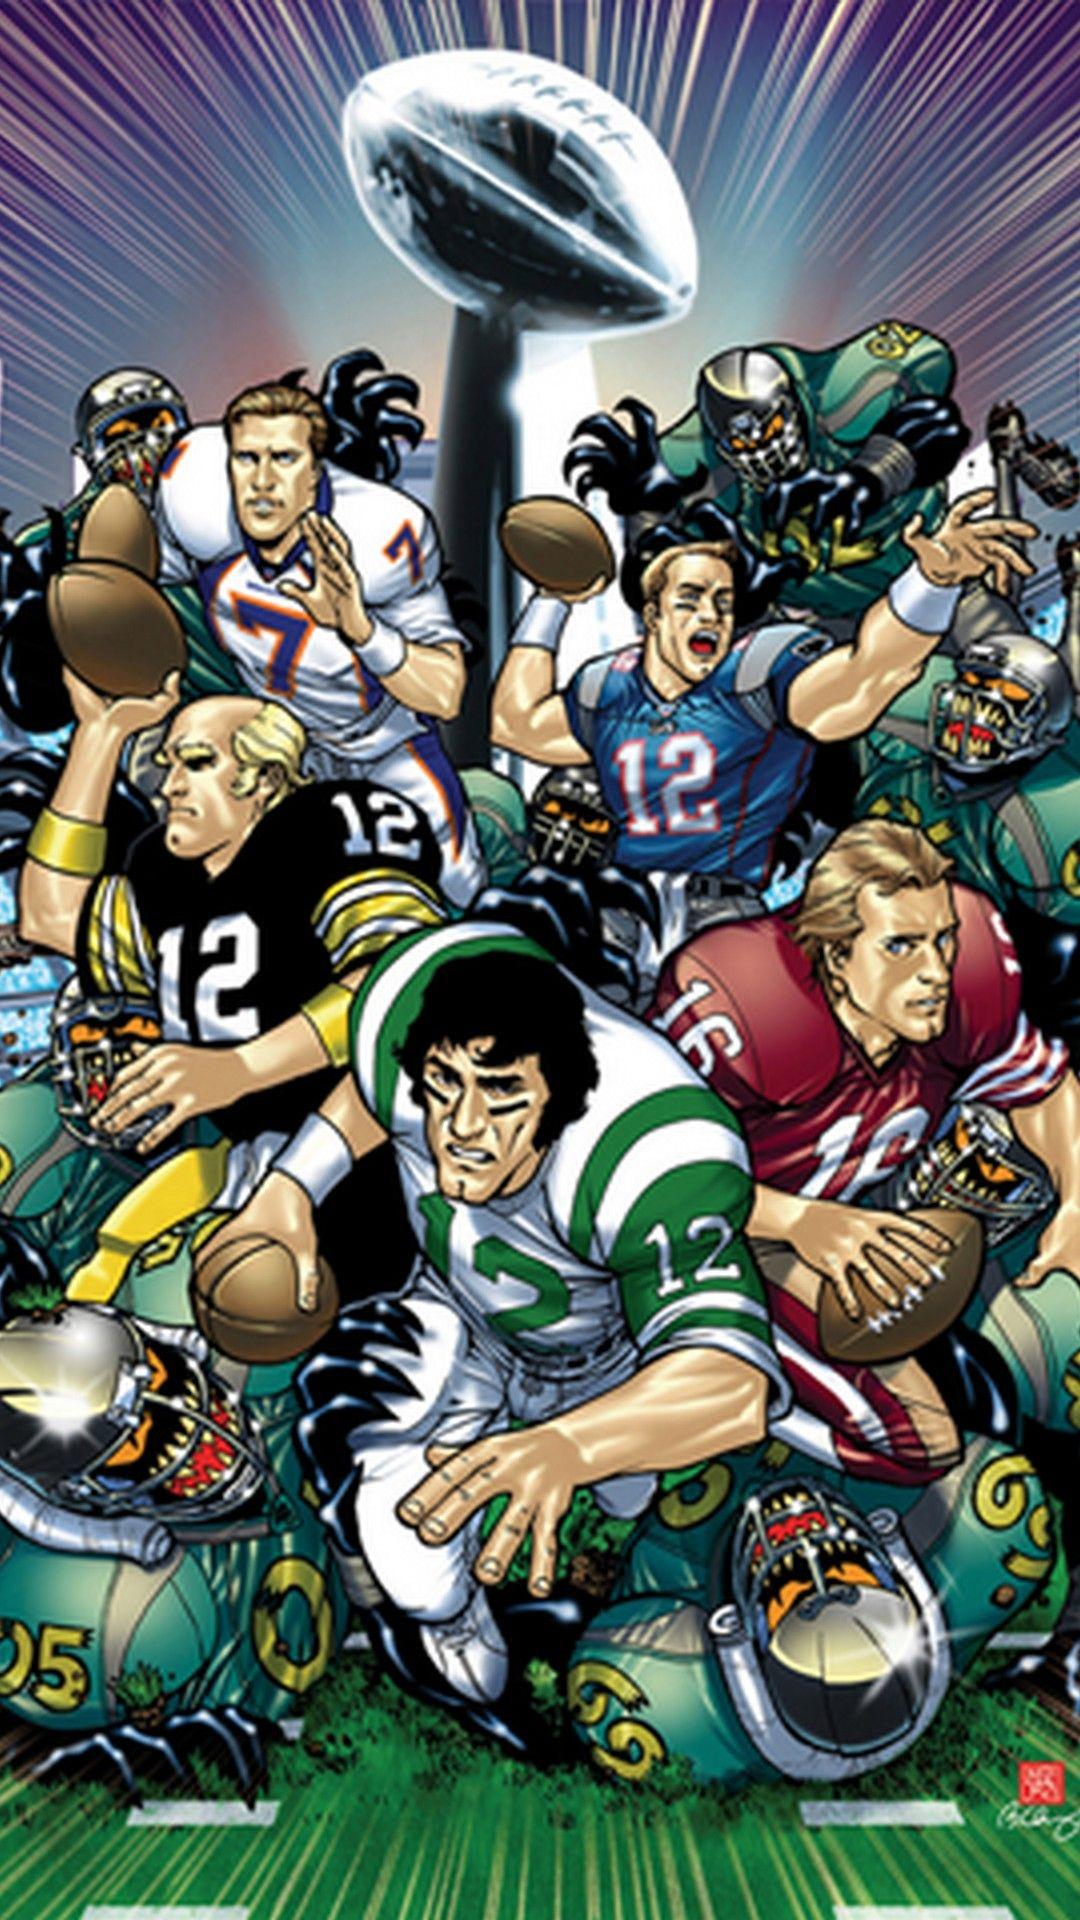 NFL iPhone 7 Wallpaper NFL Football Wallpaper. Football wallpaper, Nfl football wallpaper, Football background